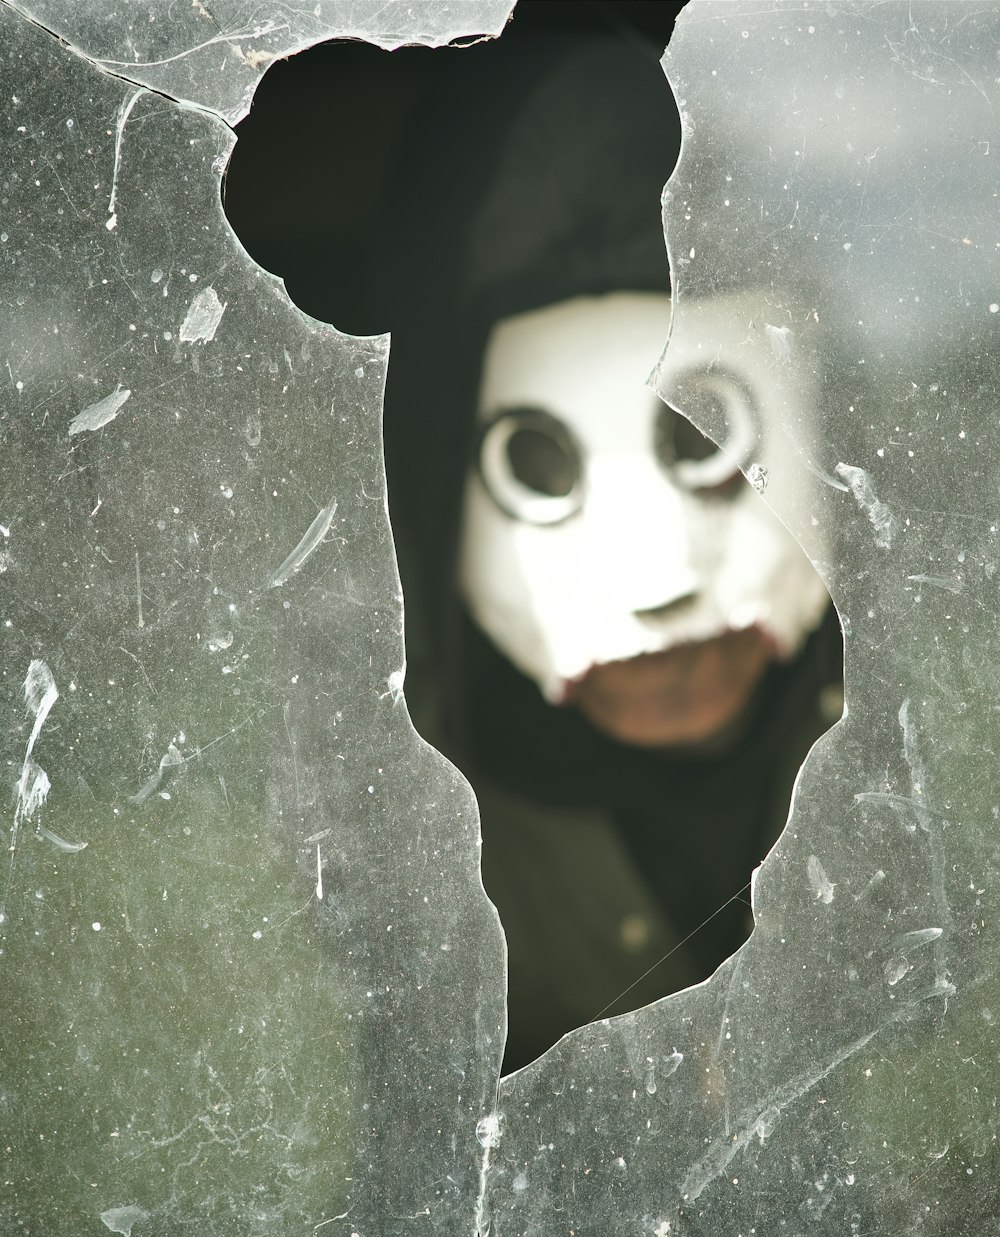 a person wearing a mask through a broken window